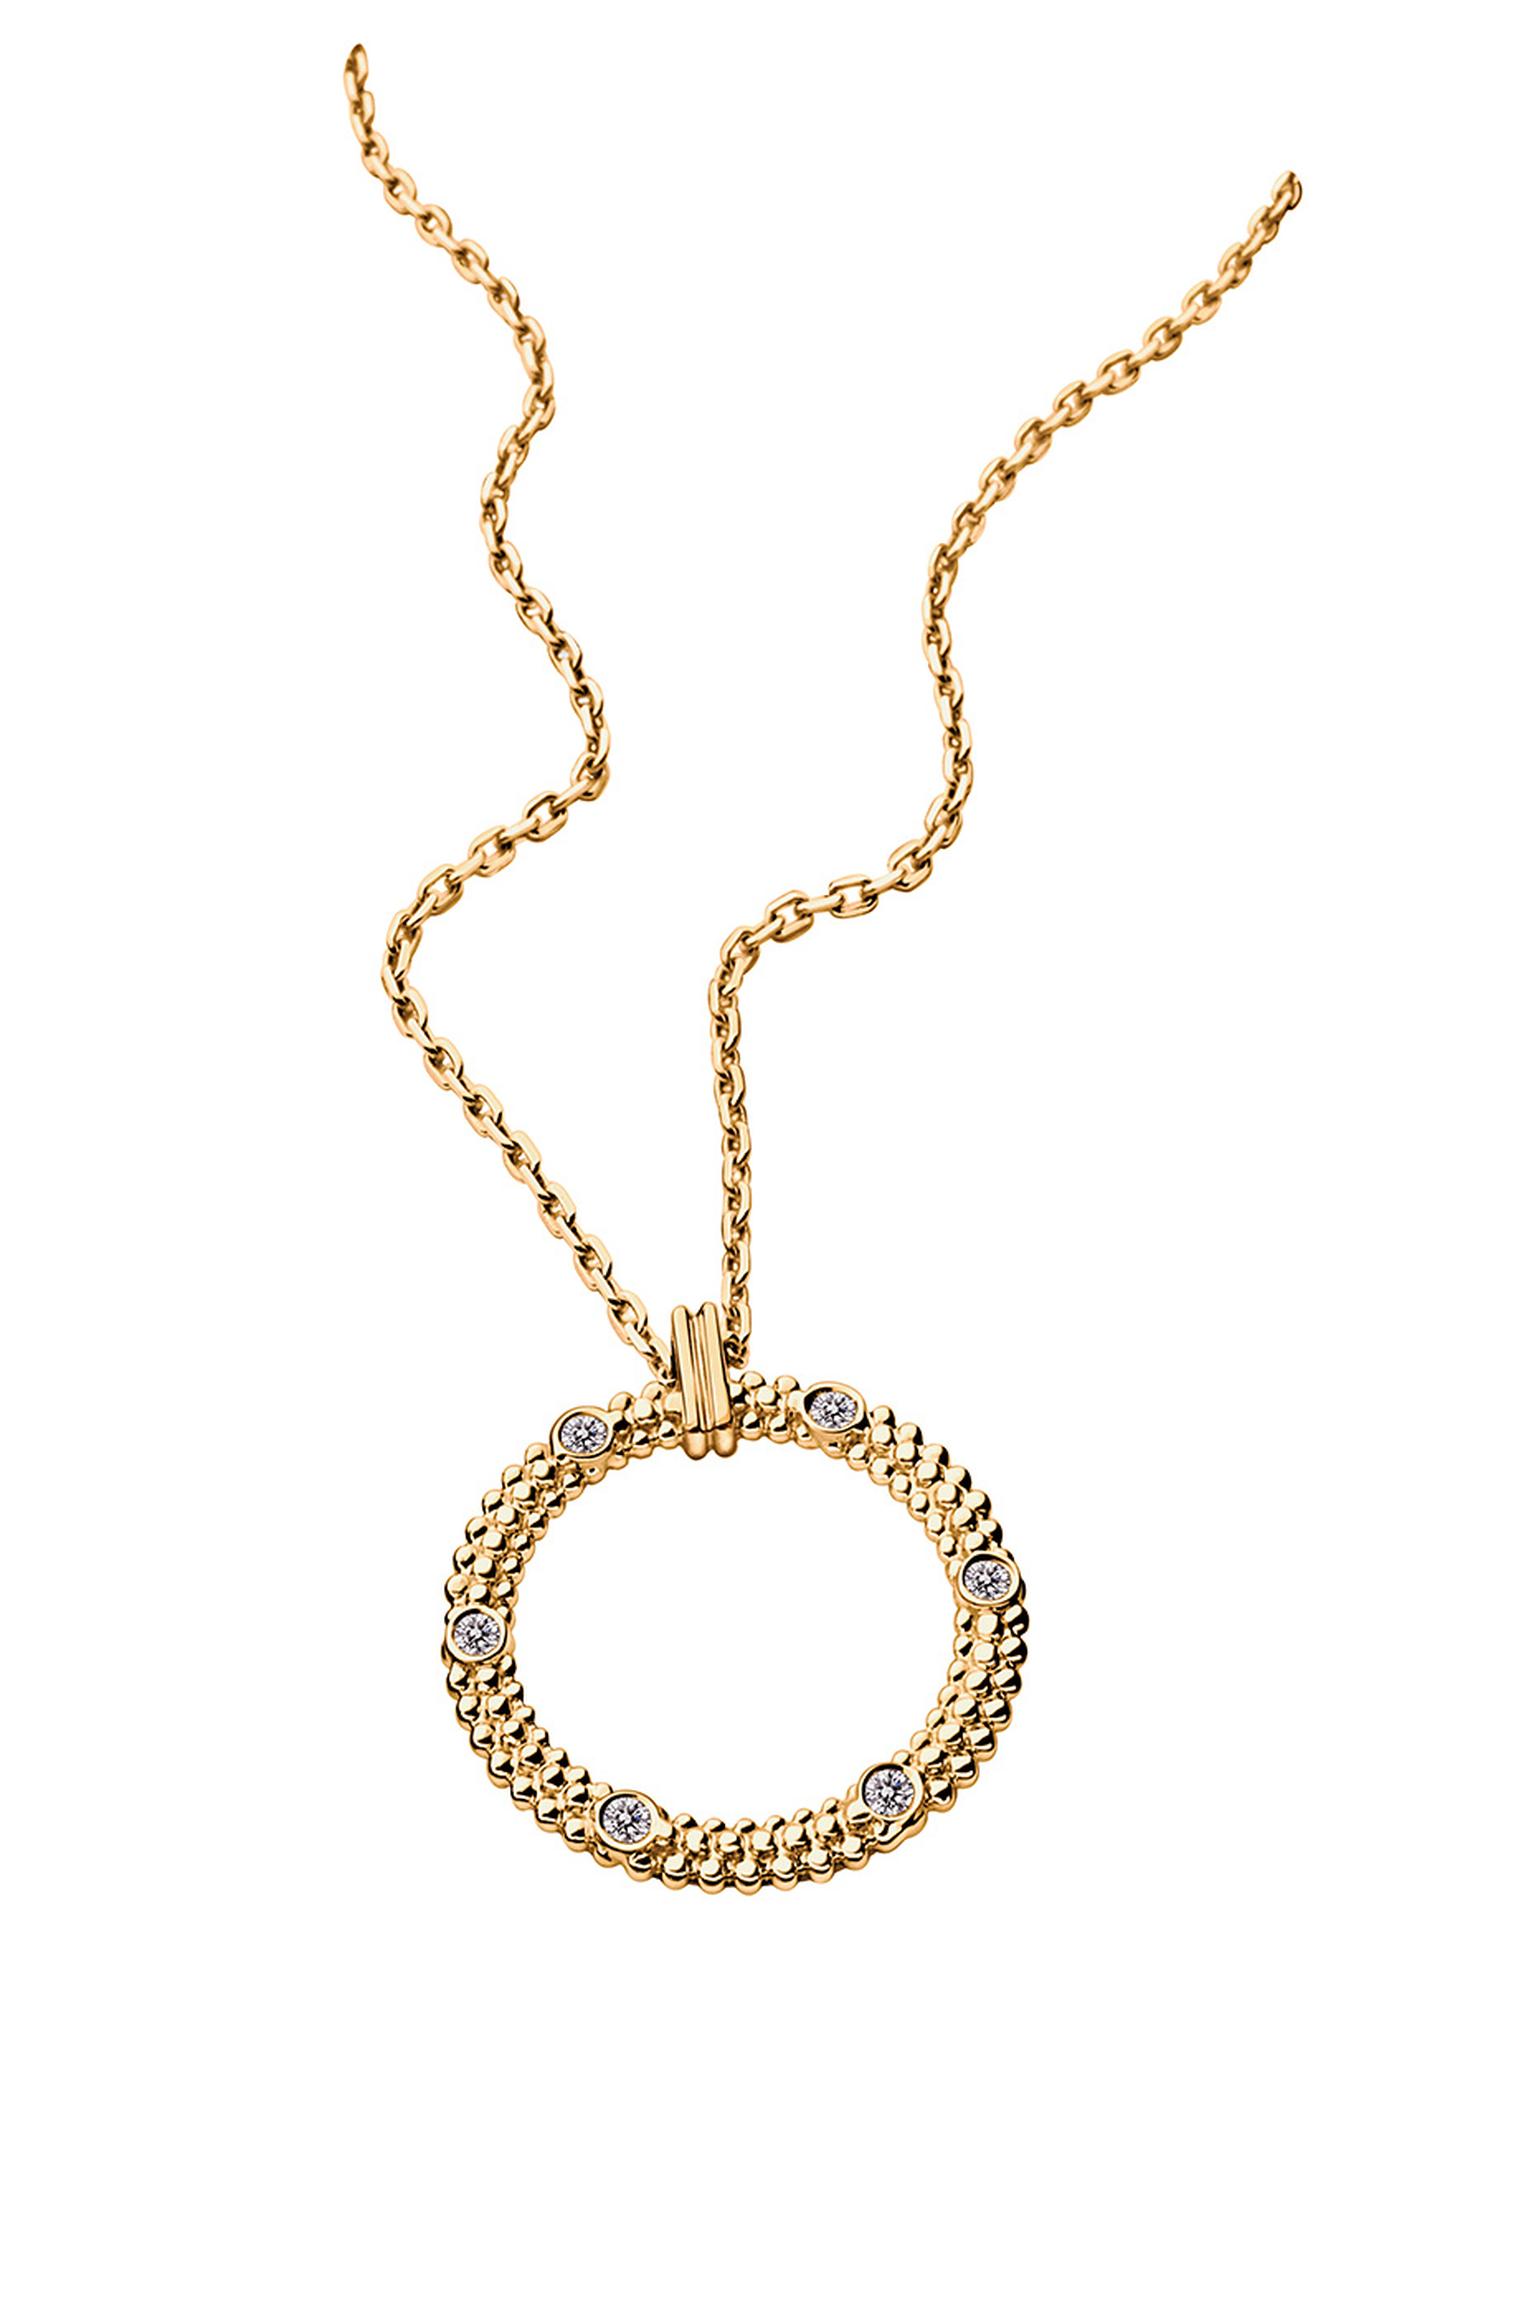 Mauboussin Le Premier Jour pendant in yellow gold, set with five  asymmetrical diamonds ($1,400).